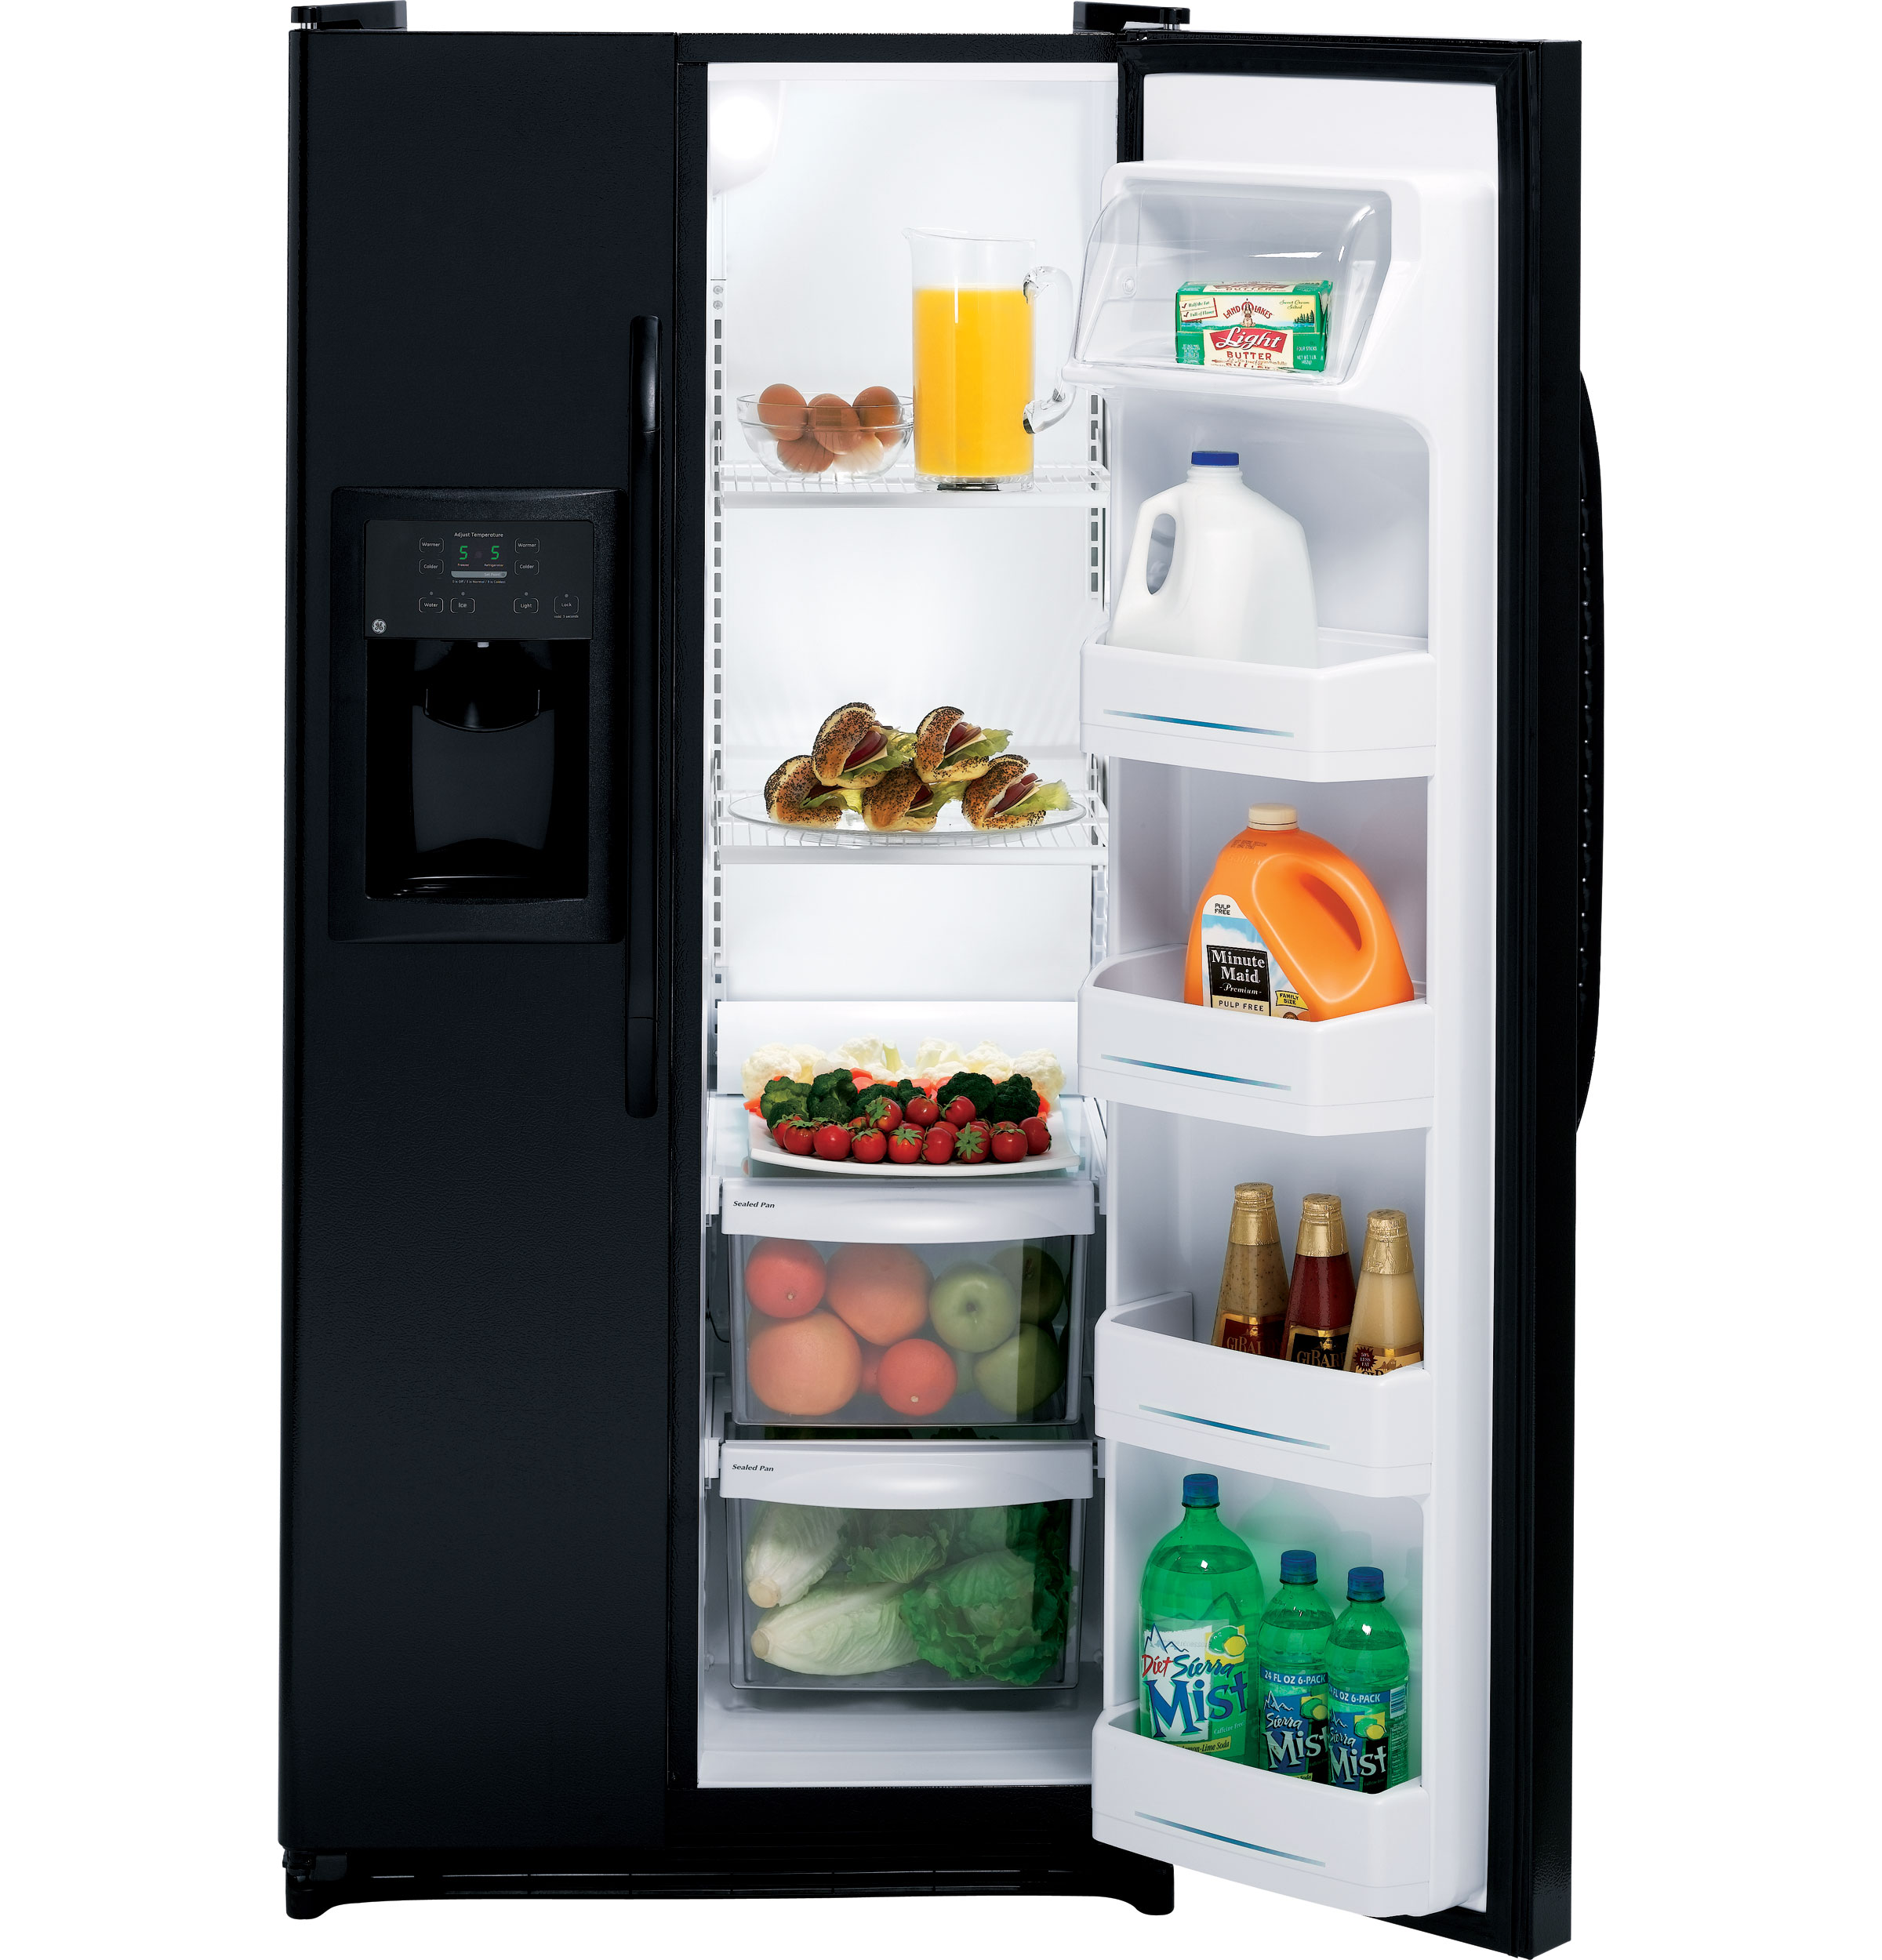 GE® 20.0 Cu. Ft. Side-By-Side Refrigerator with Dispenser